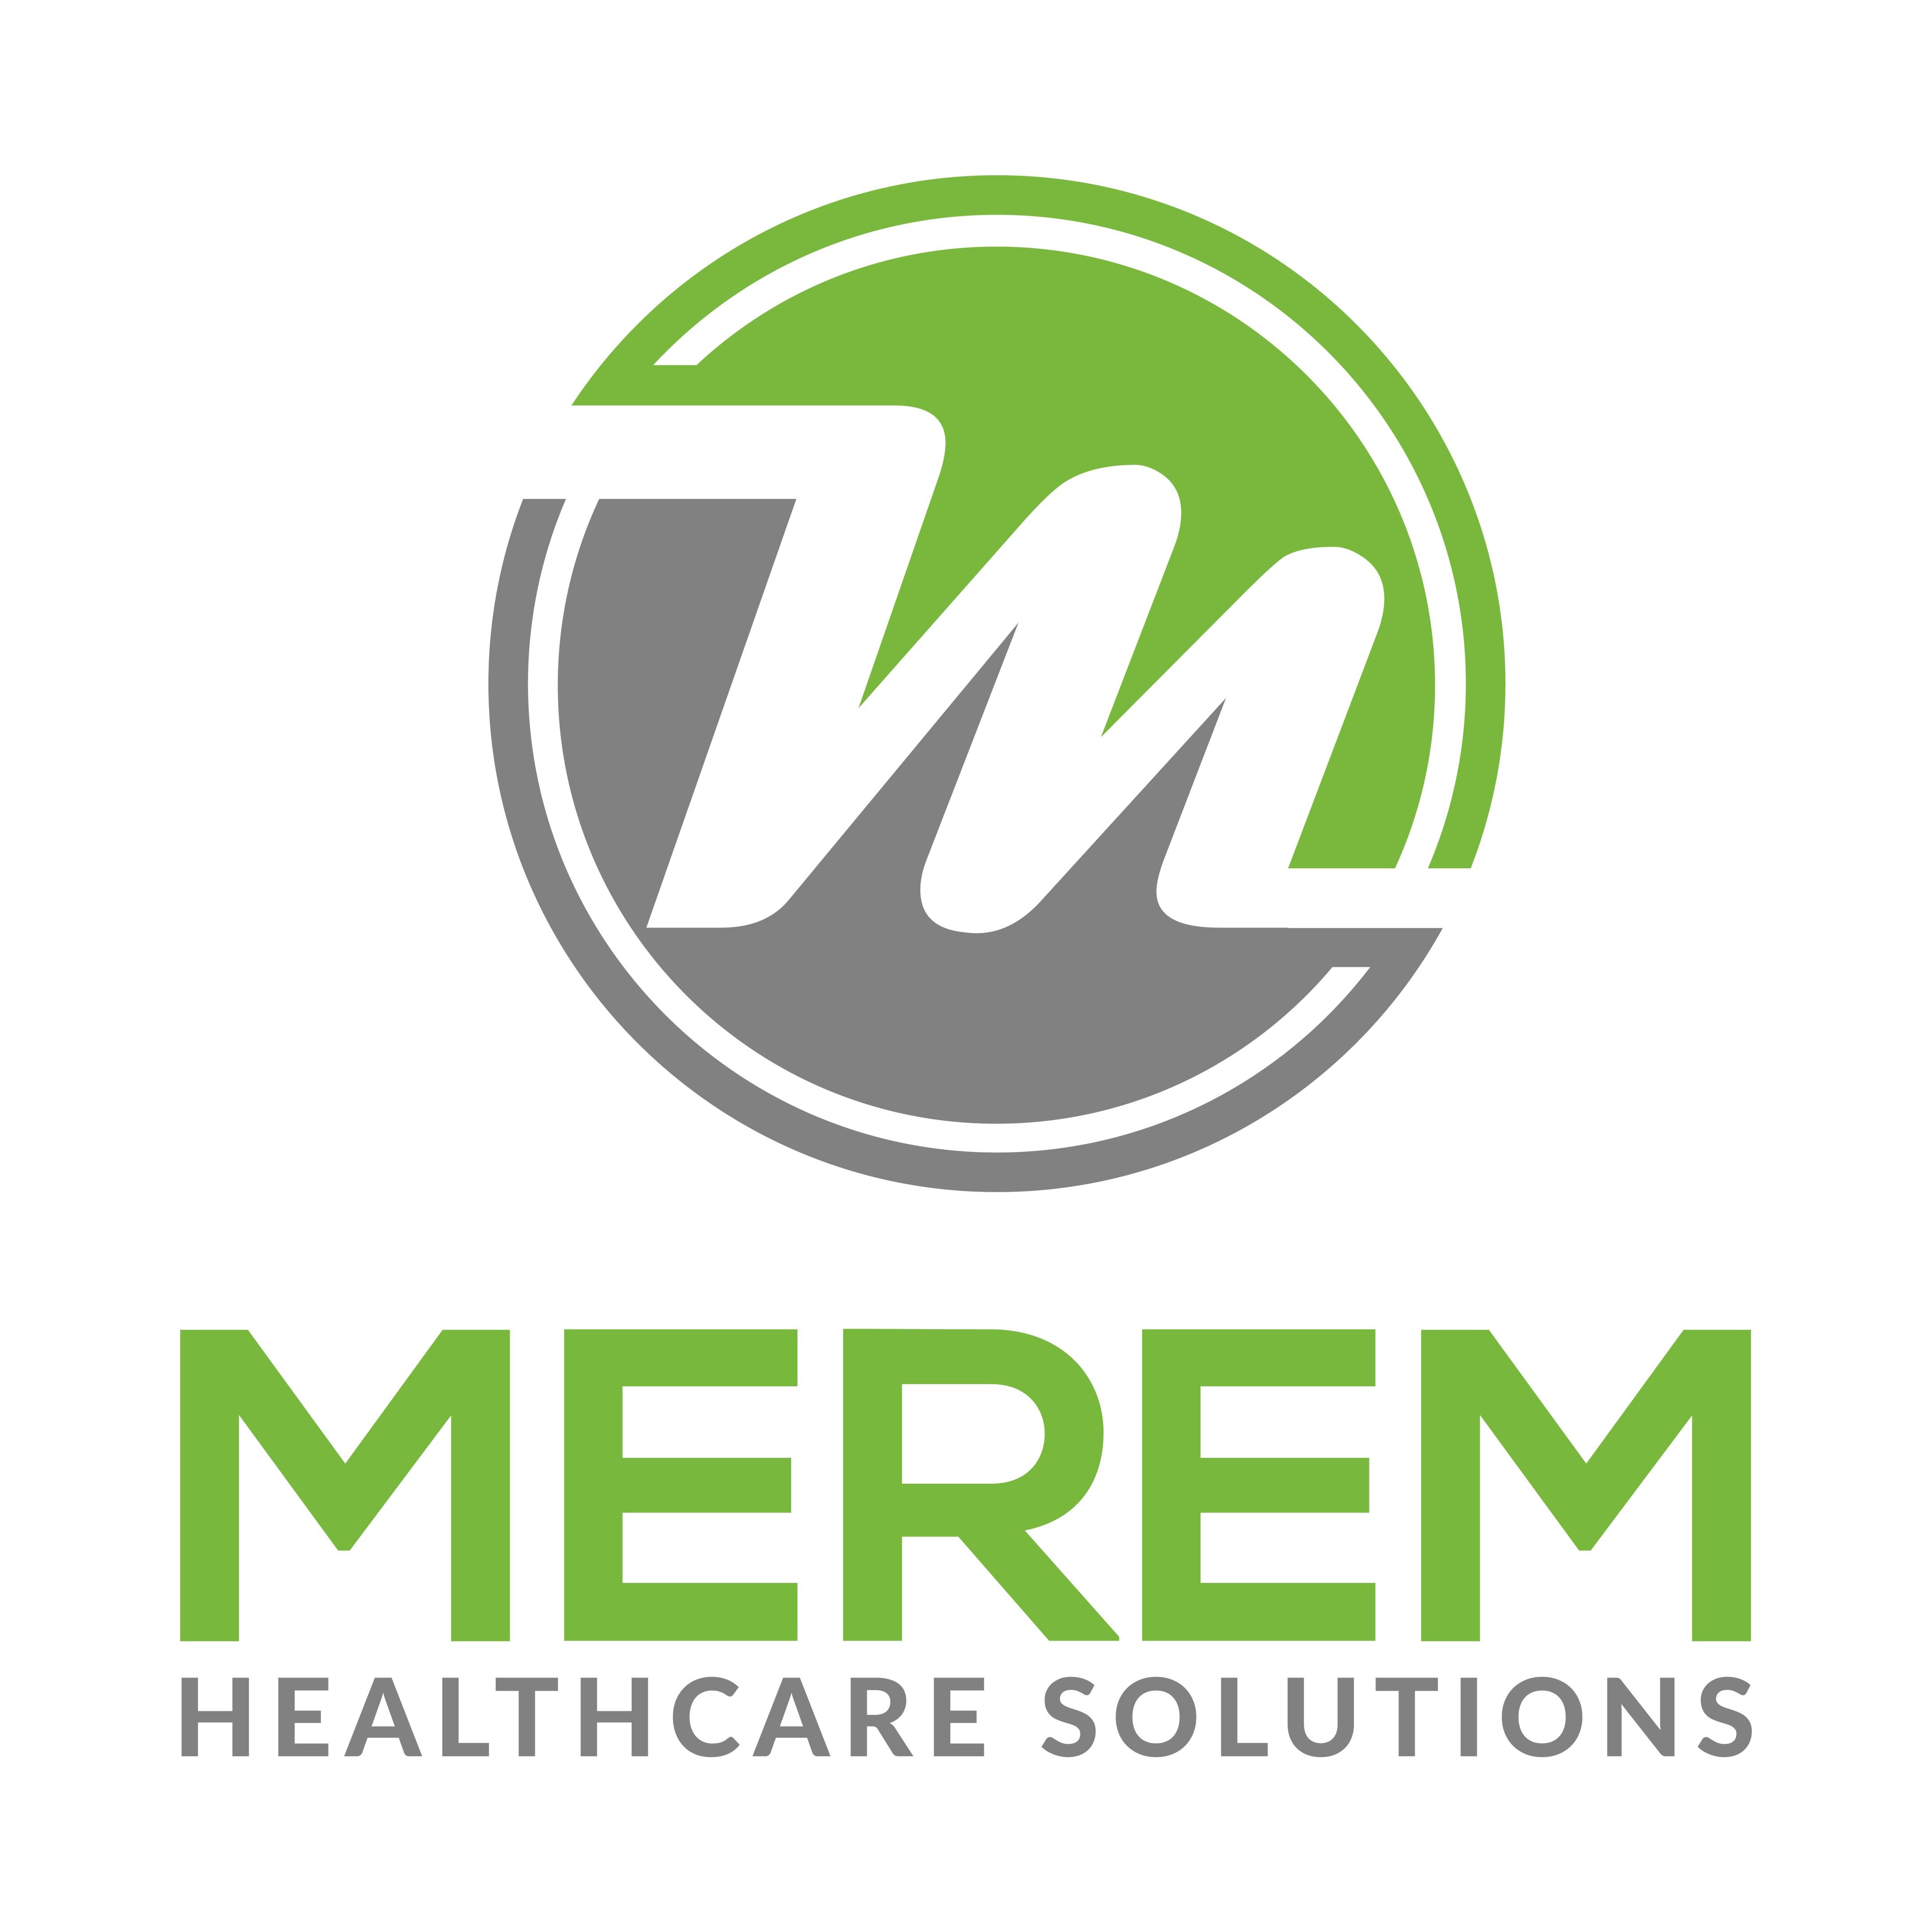 Merem Healthcare Solutions - Birmingham, AL 35209 - (205)329-7519 | ShowMeLocal.com